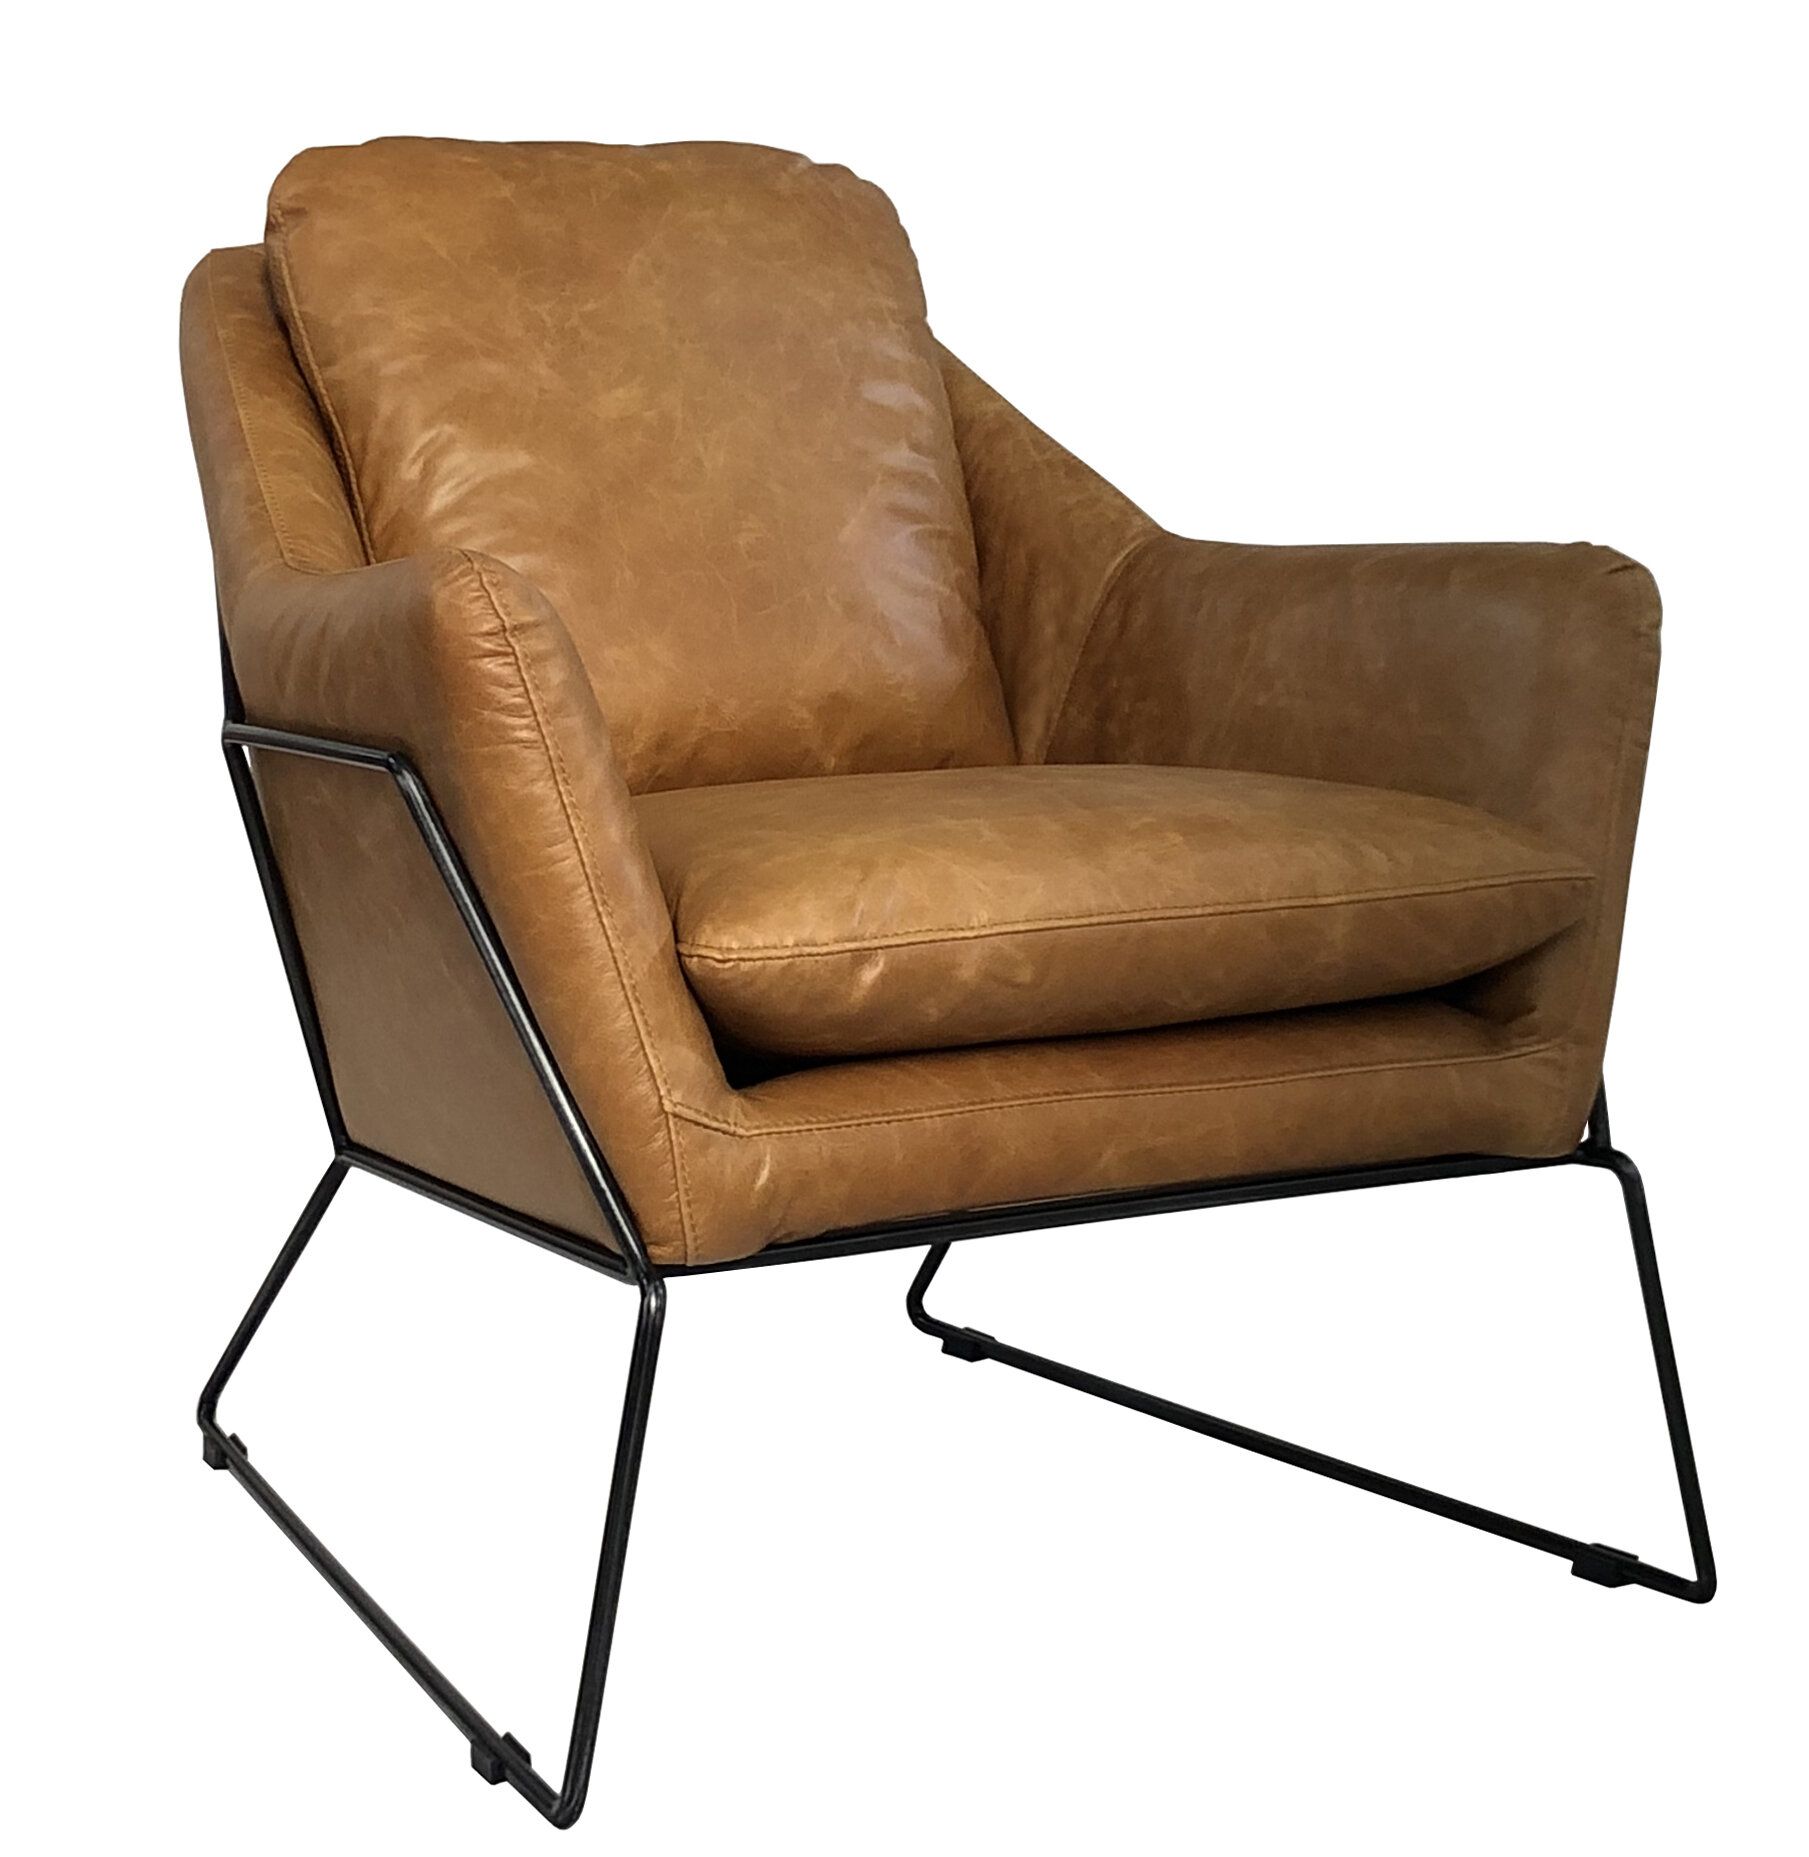 Brandenburg 29" W Top Grain Leather Lounge Chair For Sheldon Tufted Top Grain Leather Club Chairs (View 12 of 15)